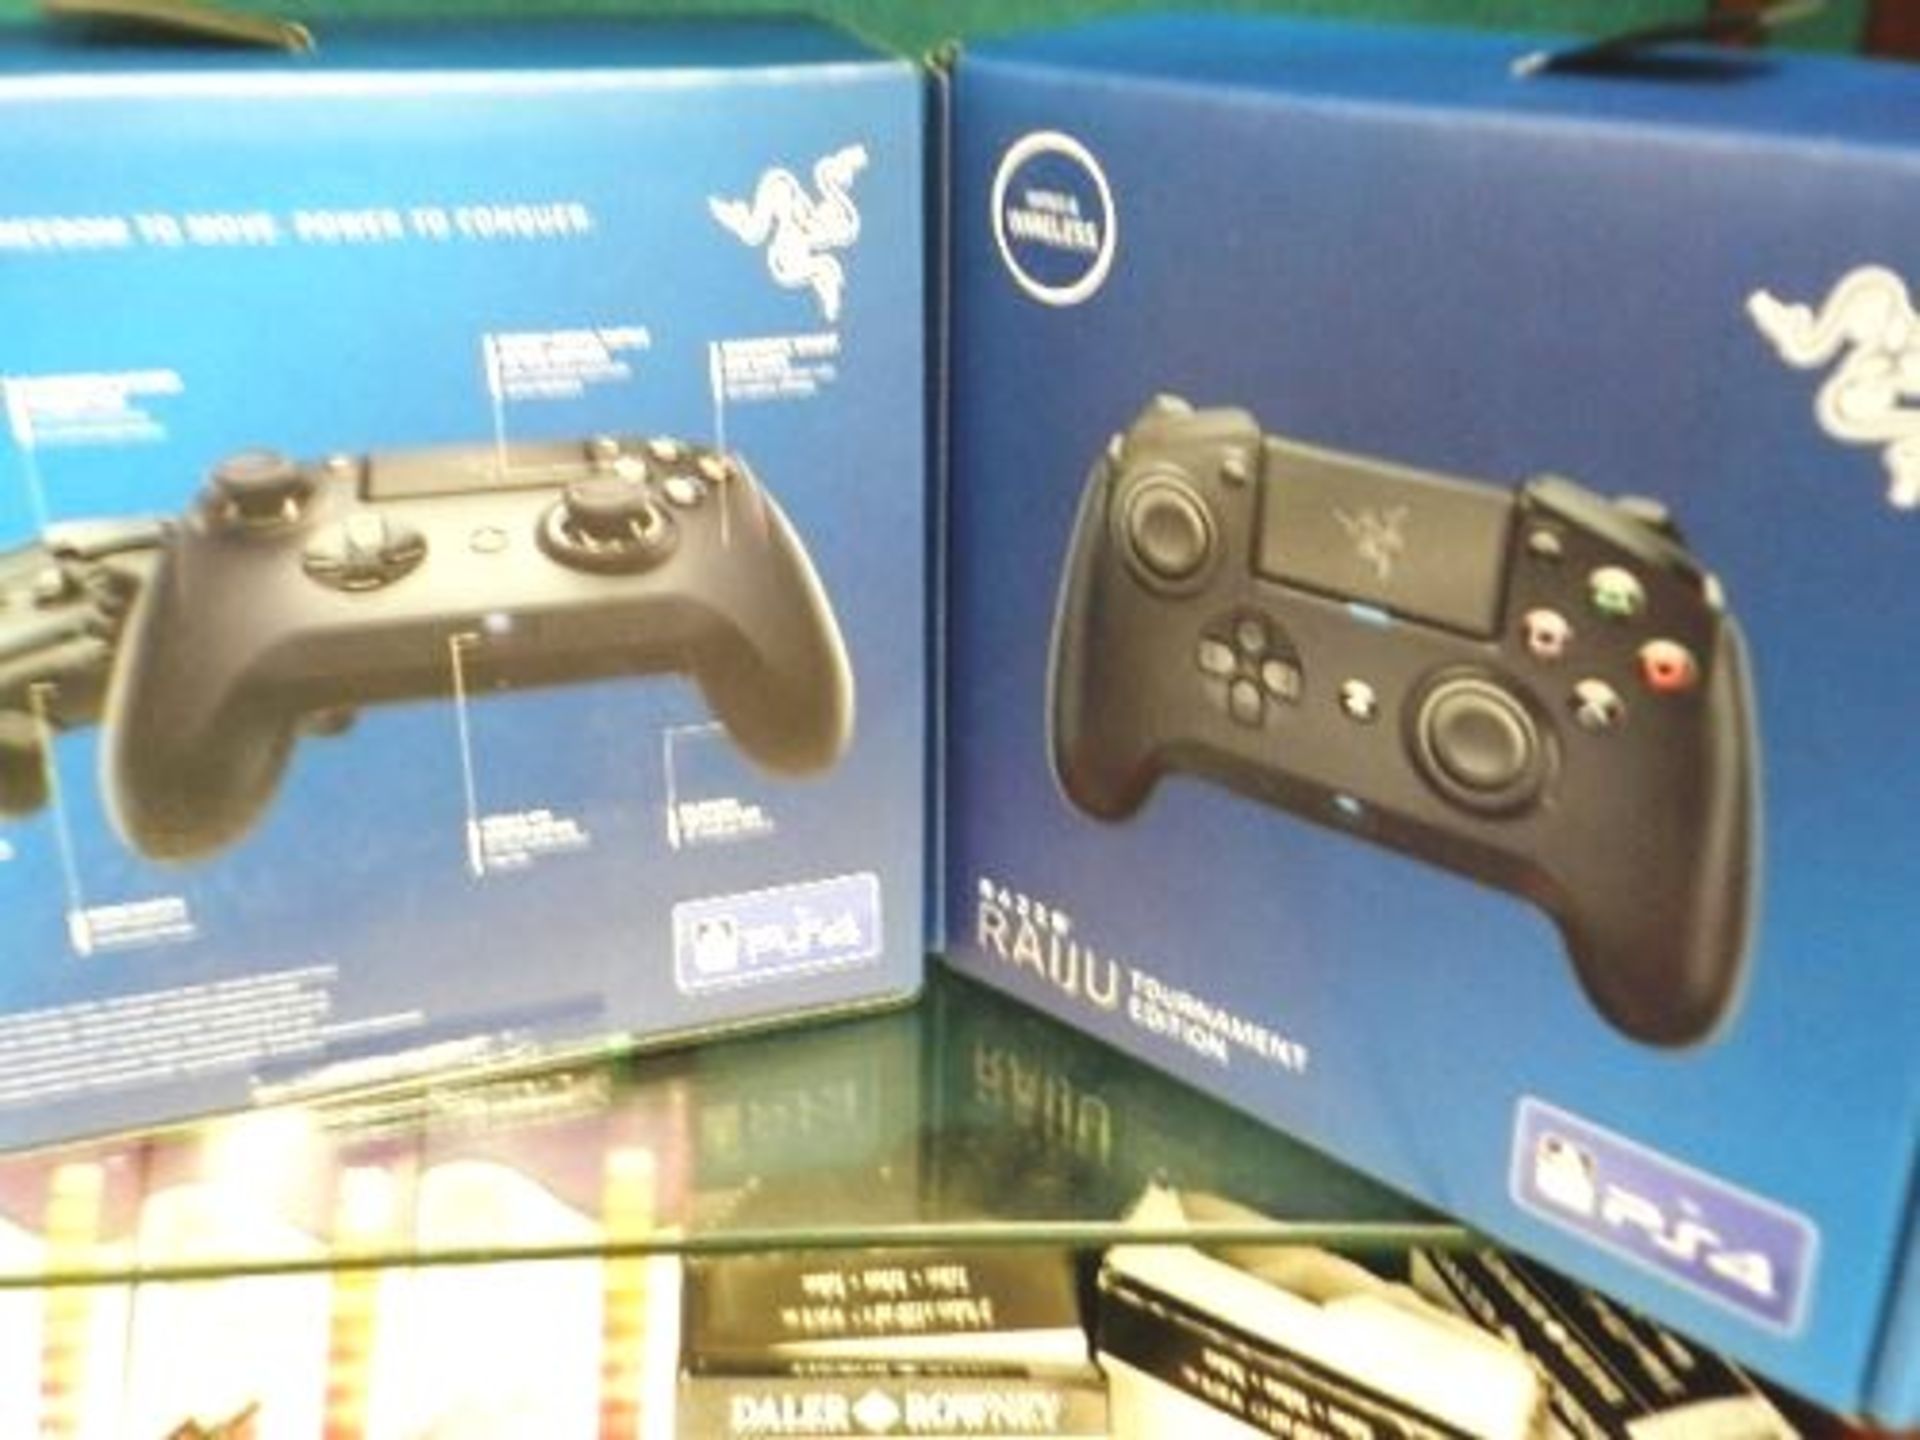 2 x Razer Raiju Tournament Edition PS4 controllers - New (C14C)